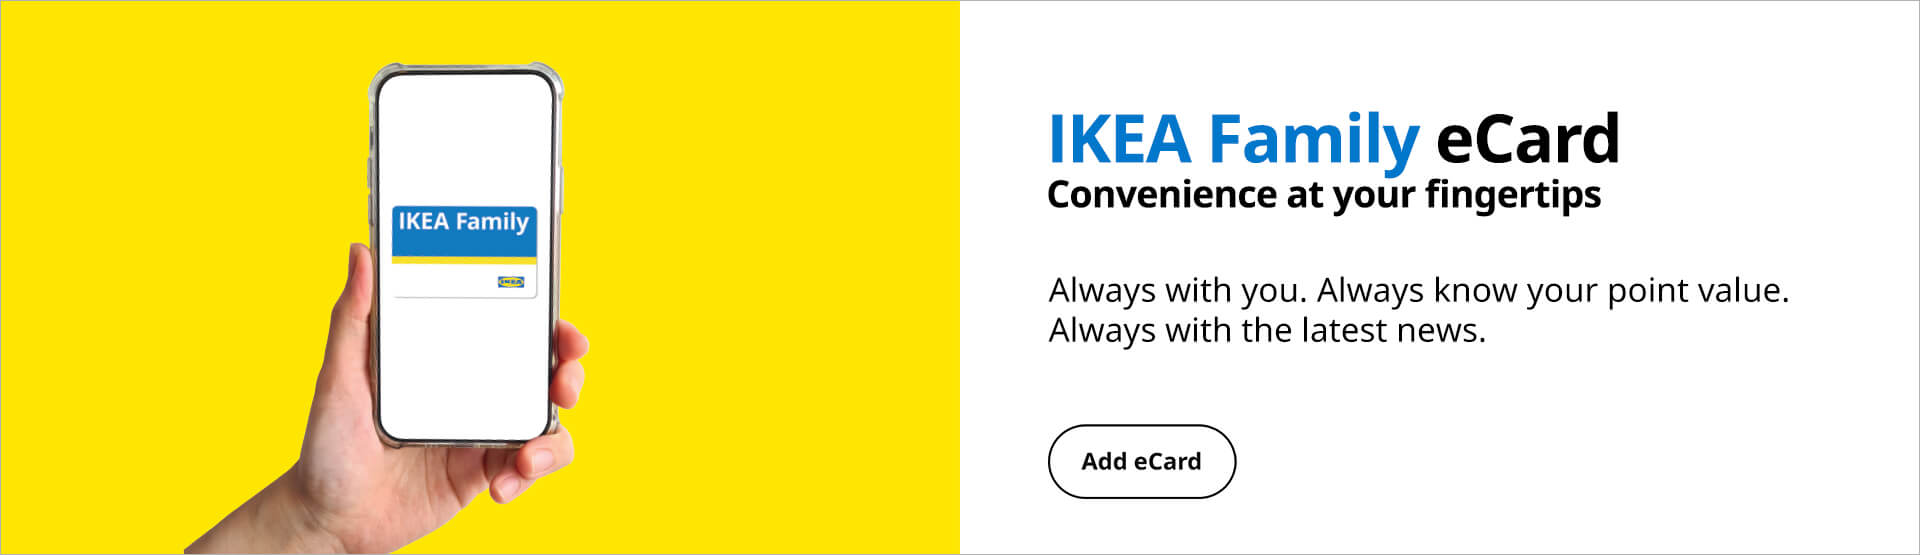 IKEA Family - eCard Banner